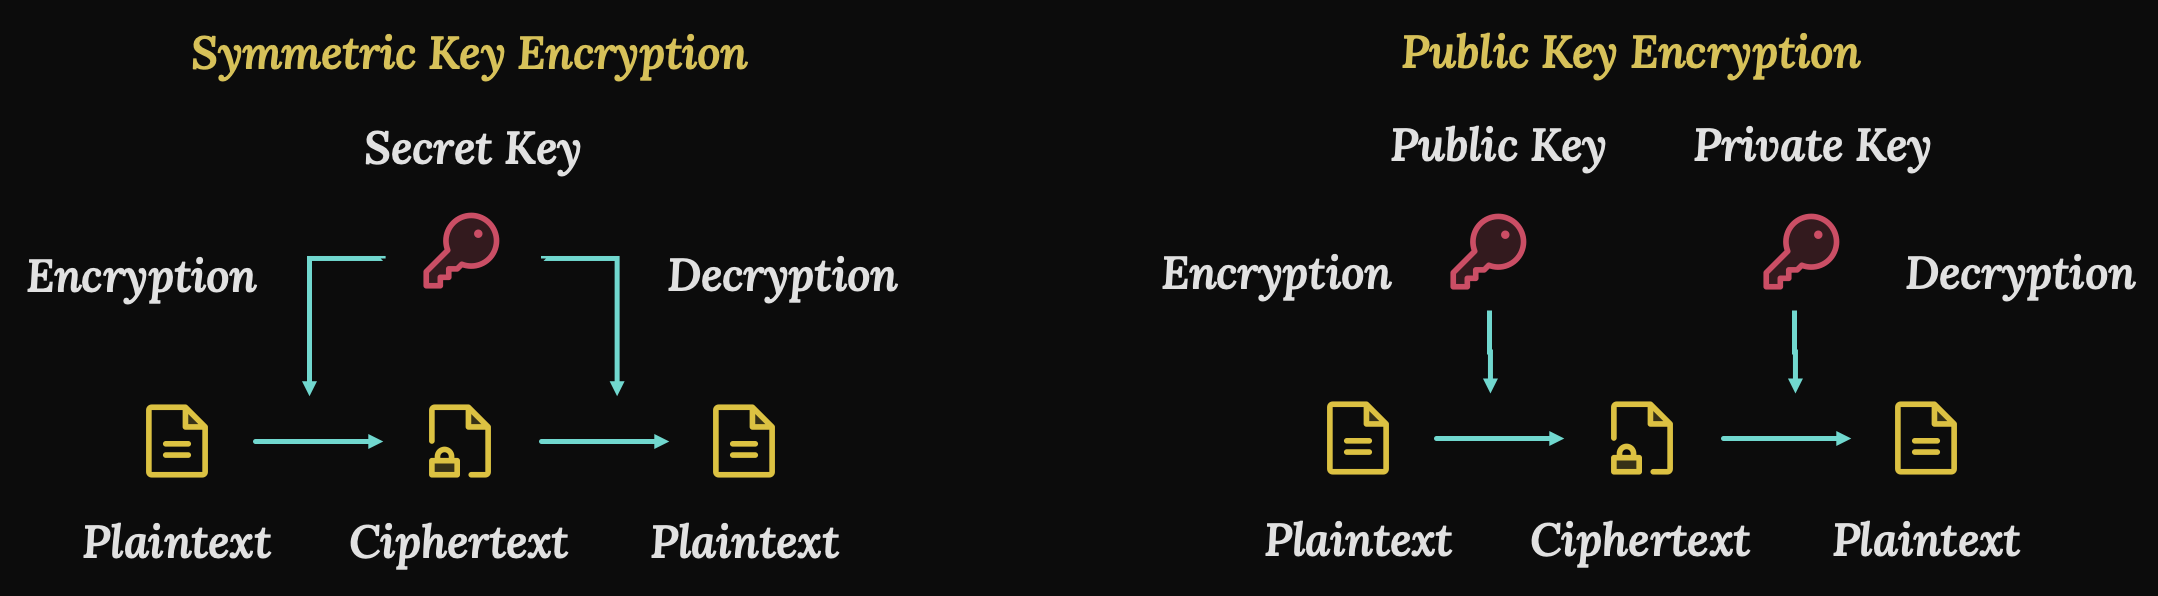 The encryption process